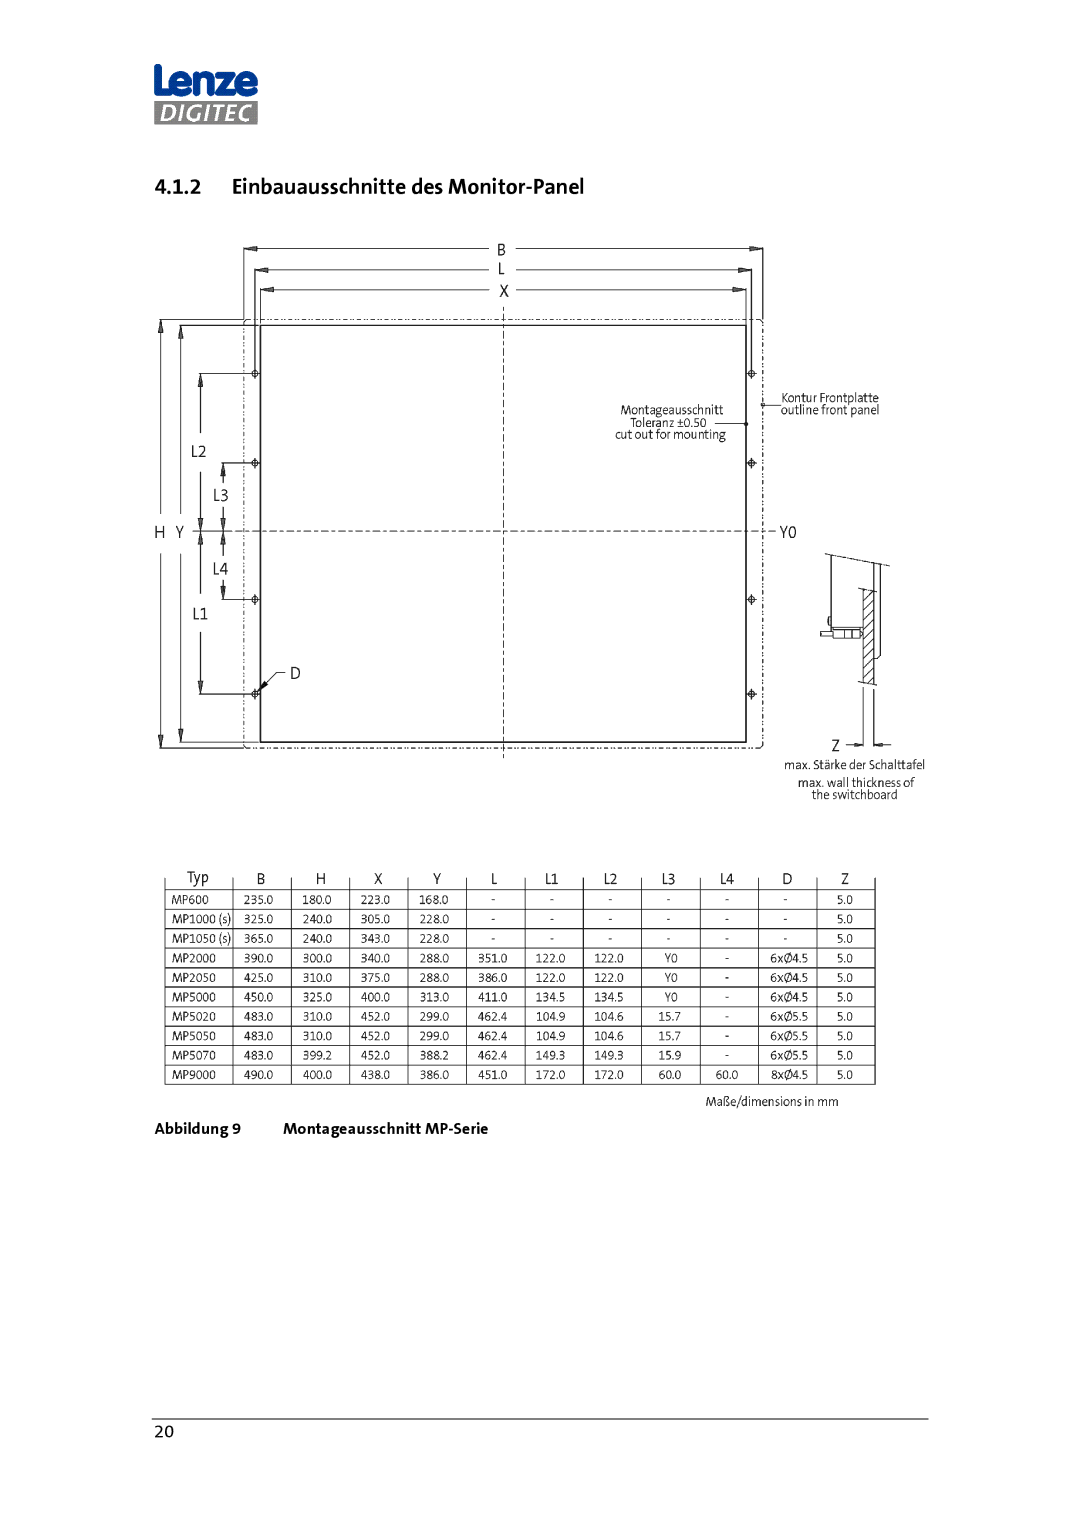 DigiTech MP 600-9000 DVI manual Einbauausschnitte des Monitor-Panel 